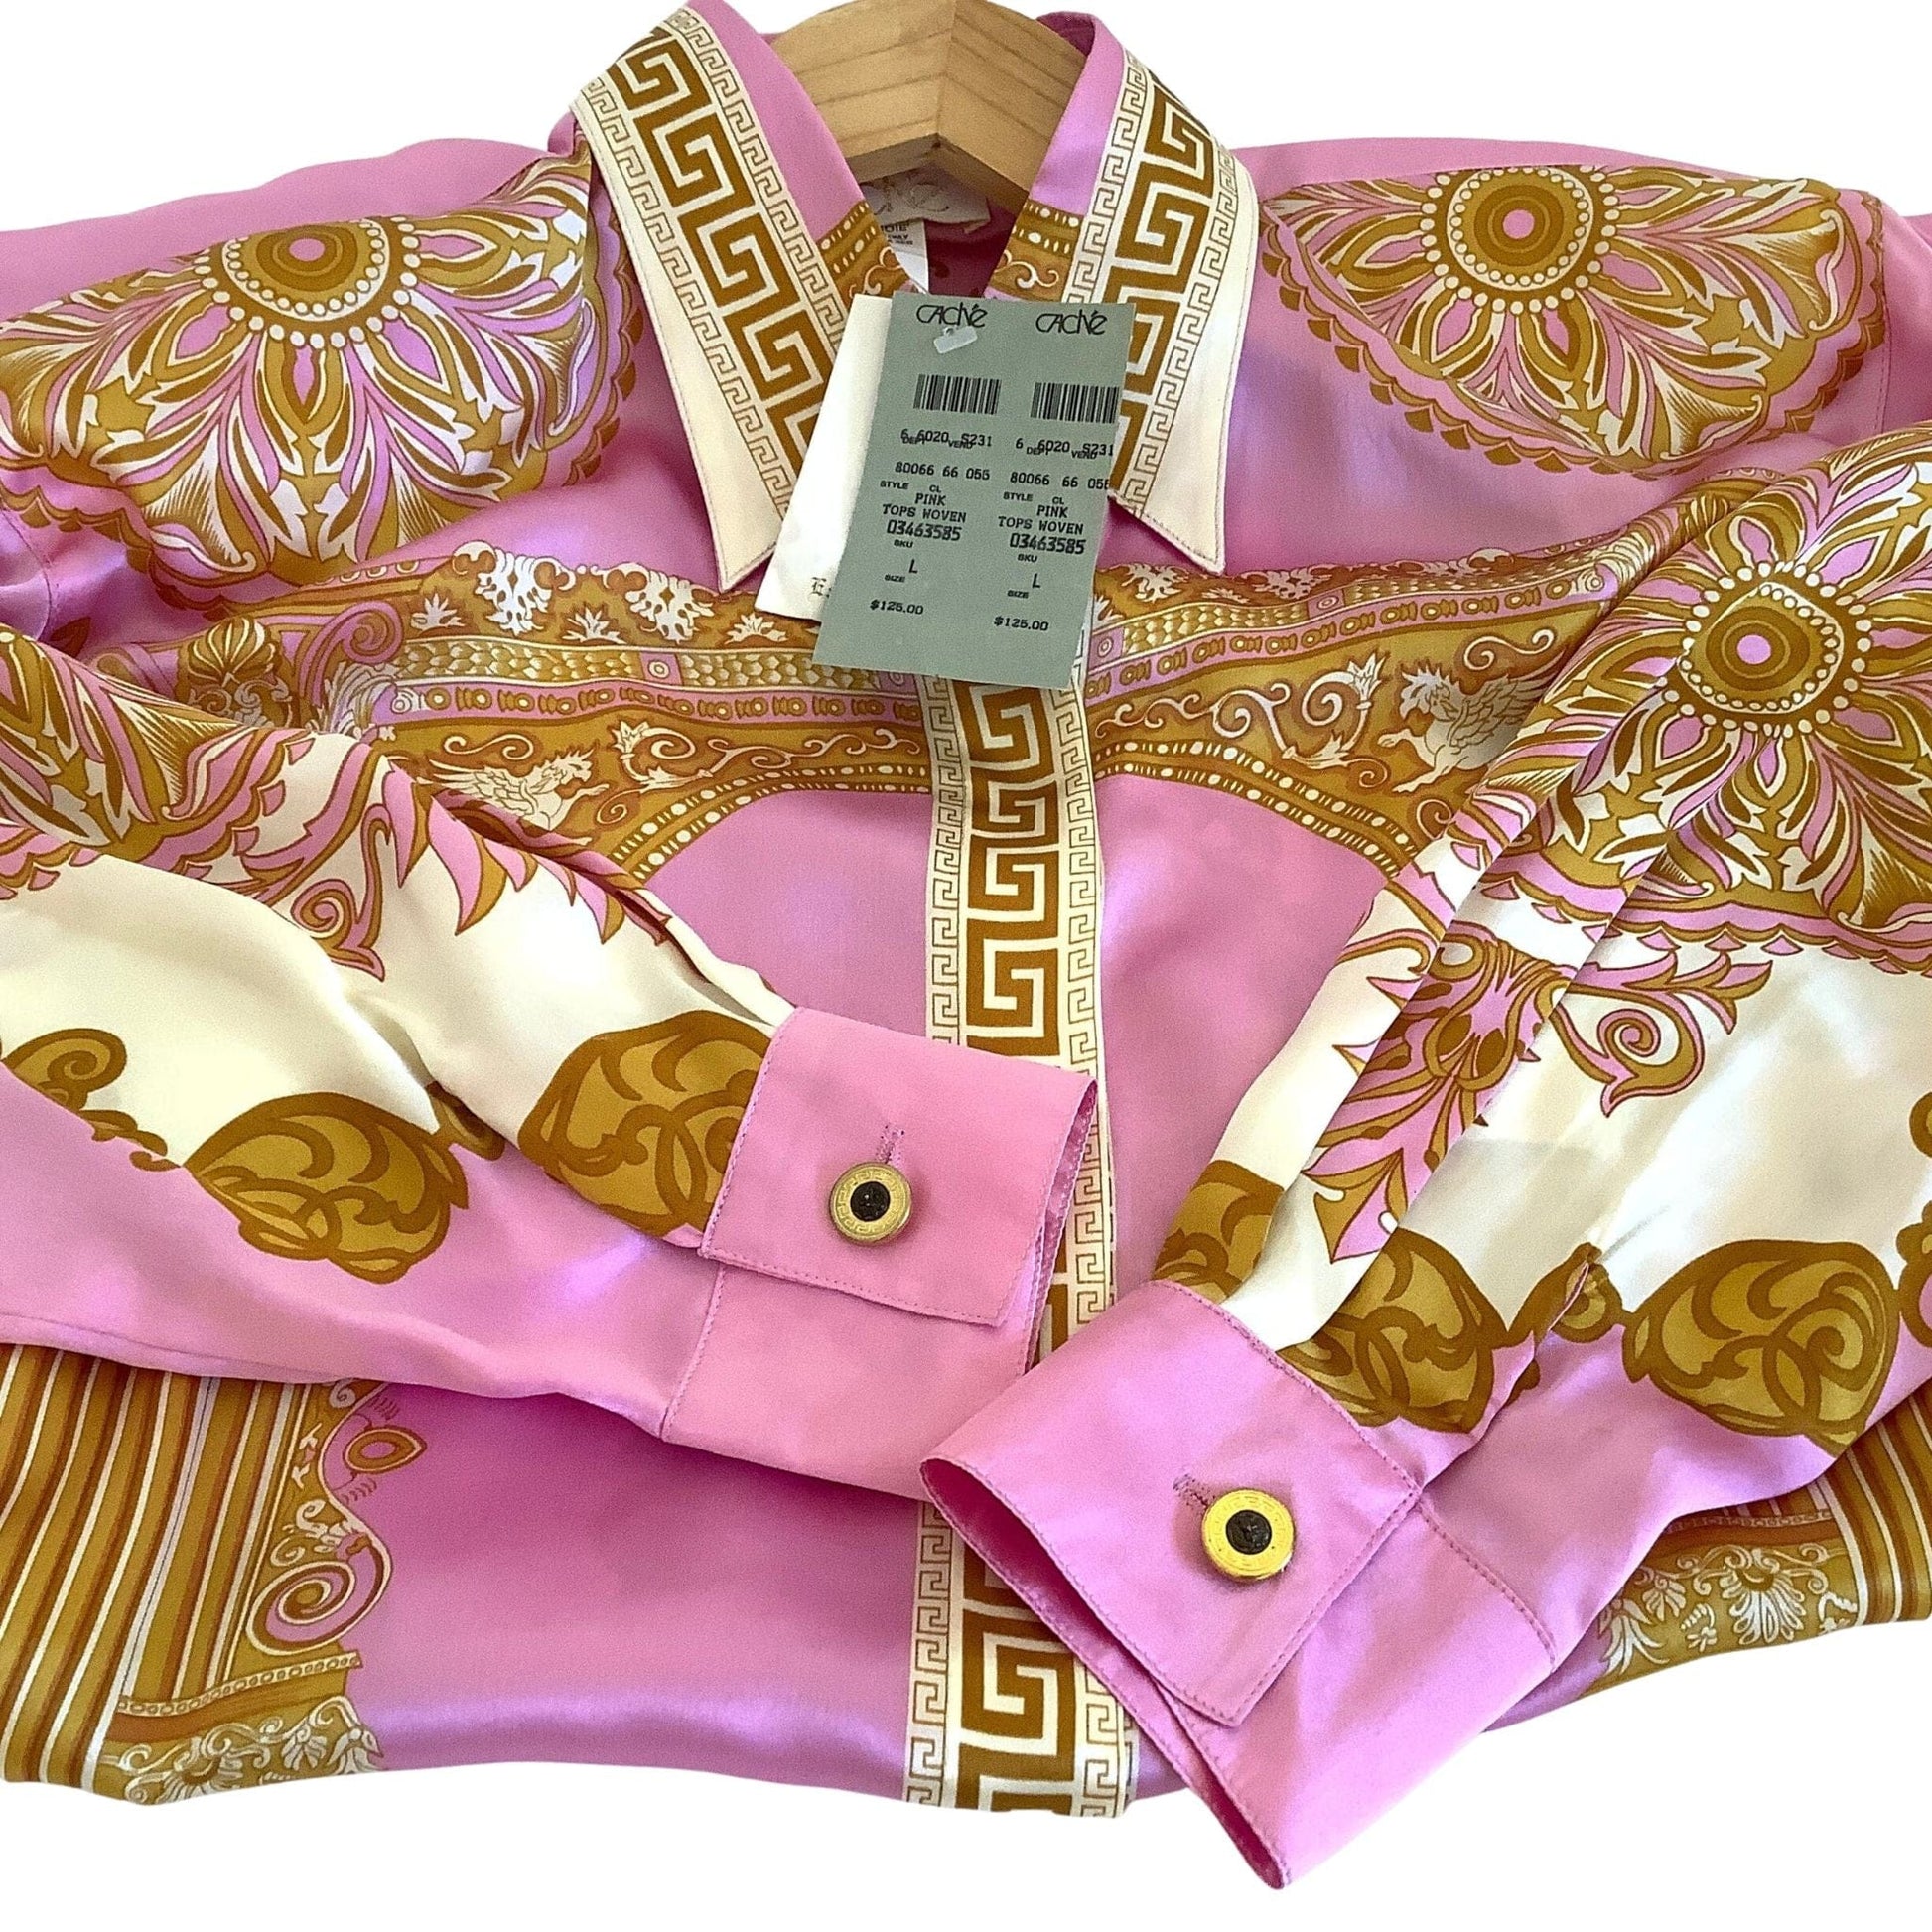 Cache Baroque Silk Blouse Medium / Pink / Vintage 1980s